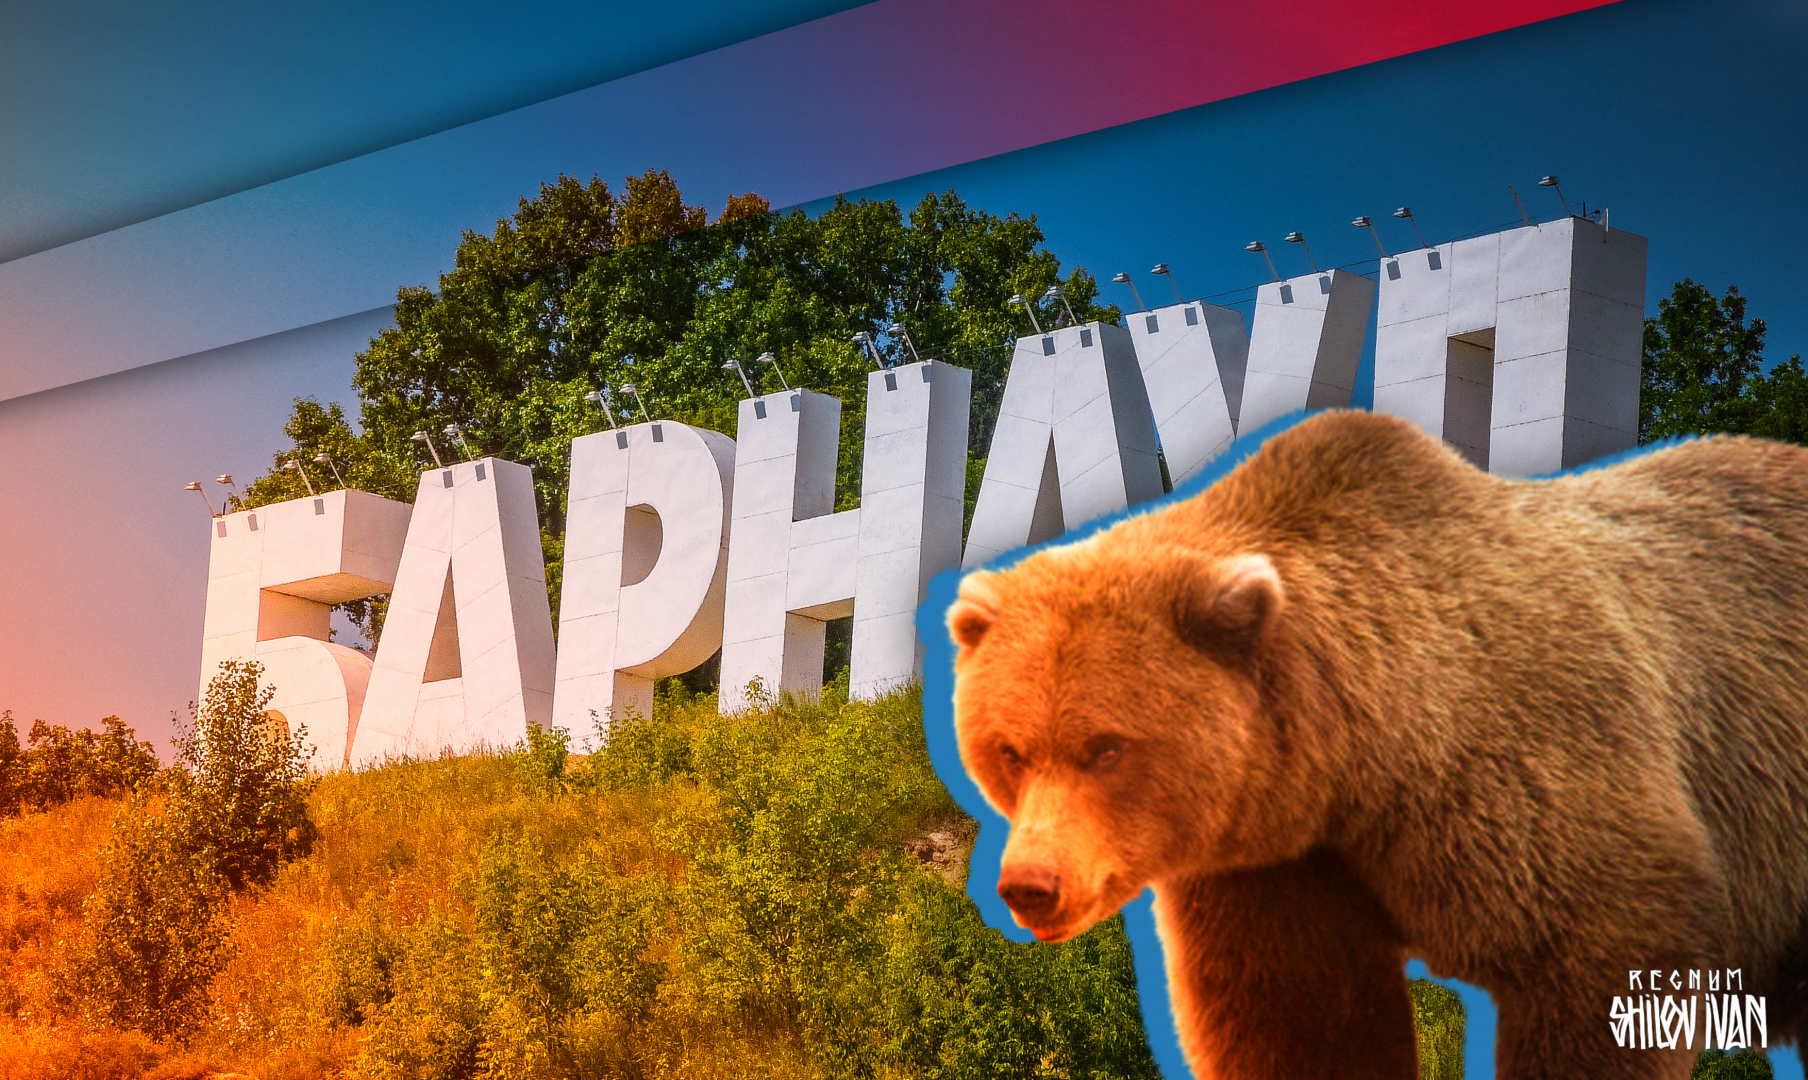 Сайт про барнаул. Барнаул медведь. Барнаул медведь на улице. Символ Барнаула медведь. Барнаул город Сибири медведь.